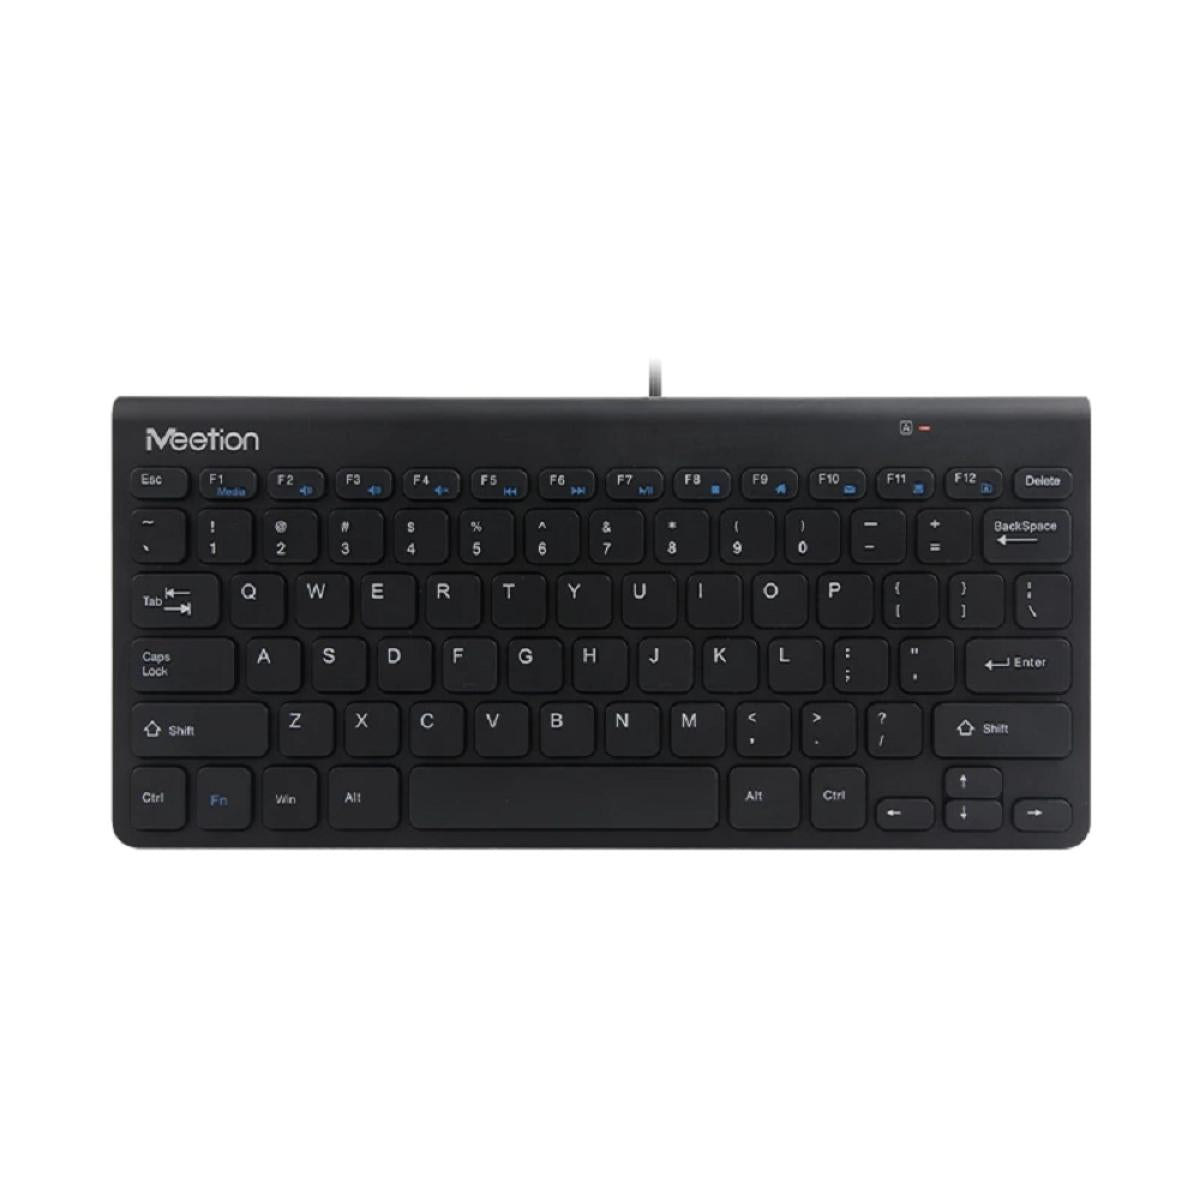 Meetion USB Mini Office Keyboard - Black